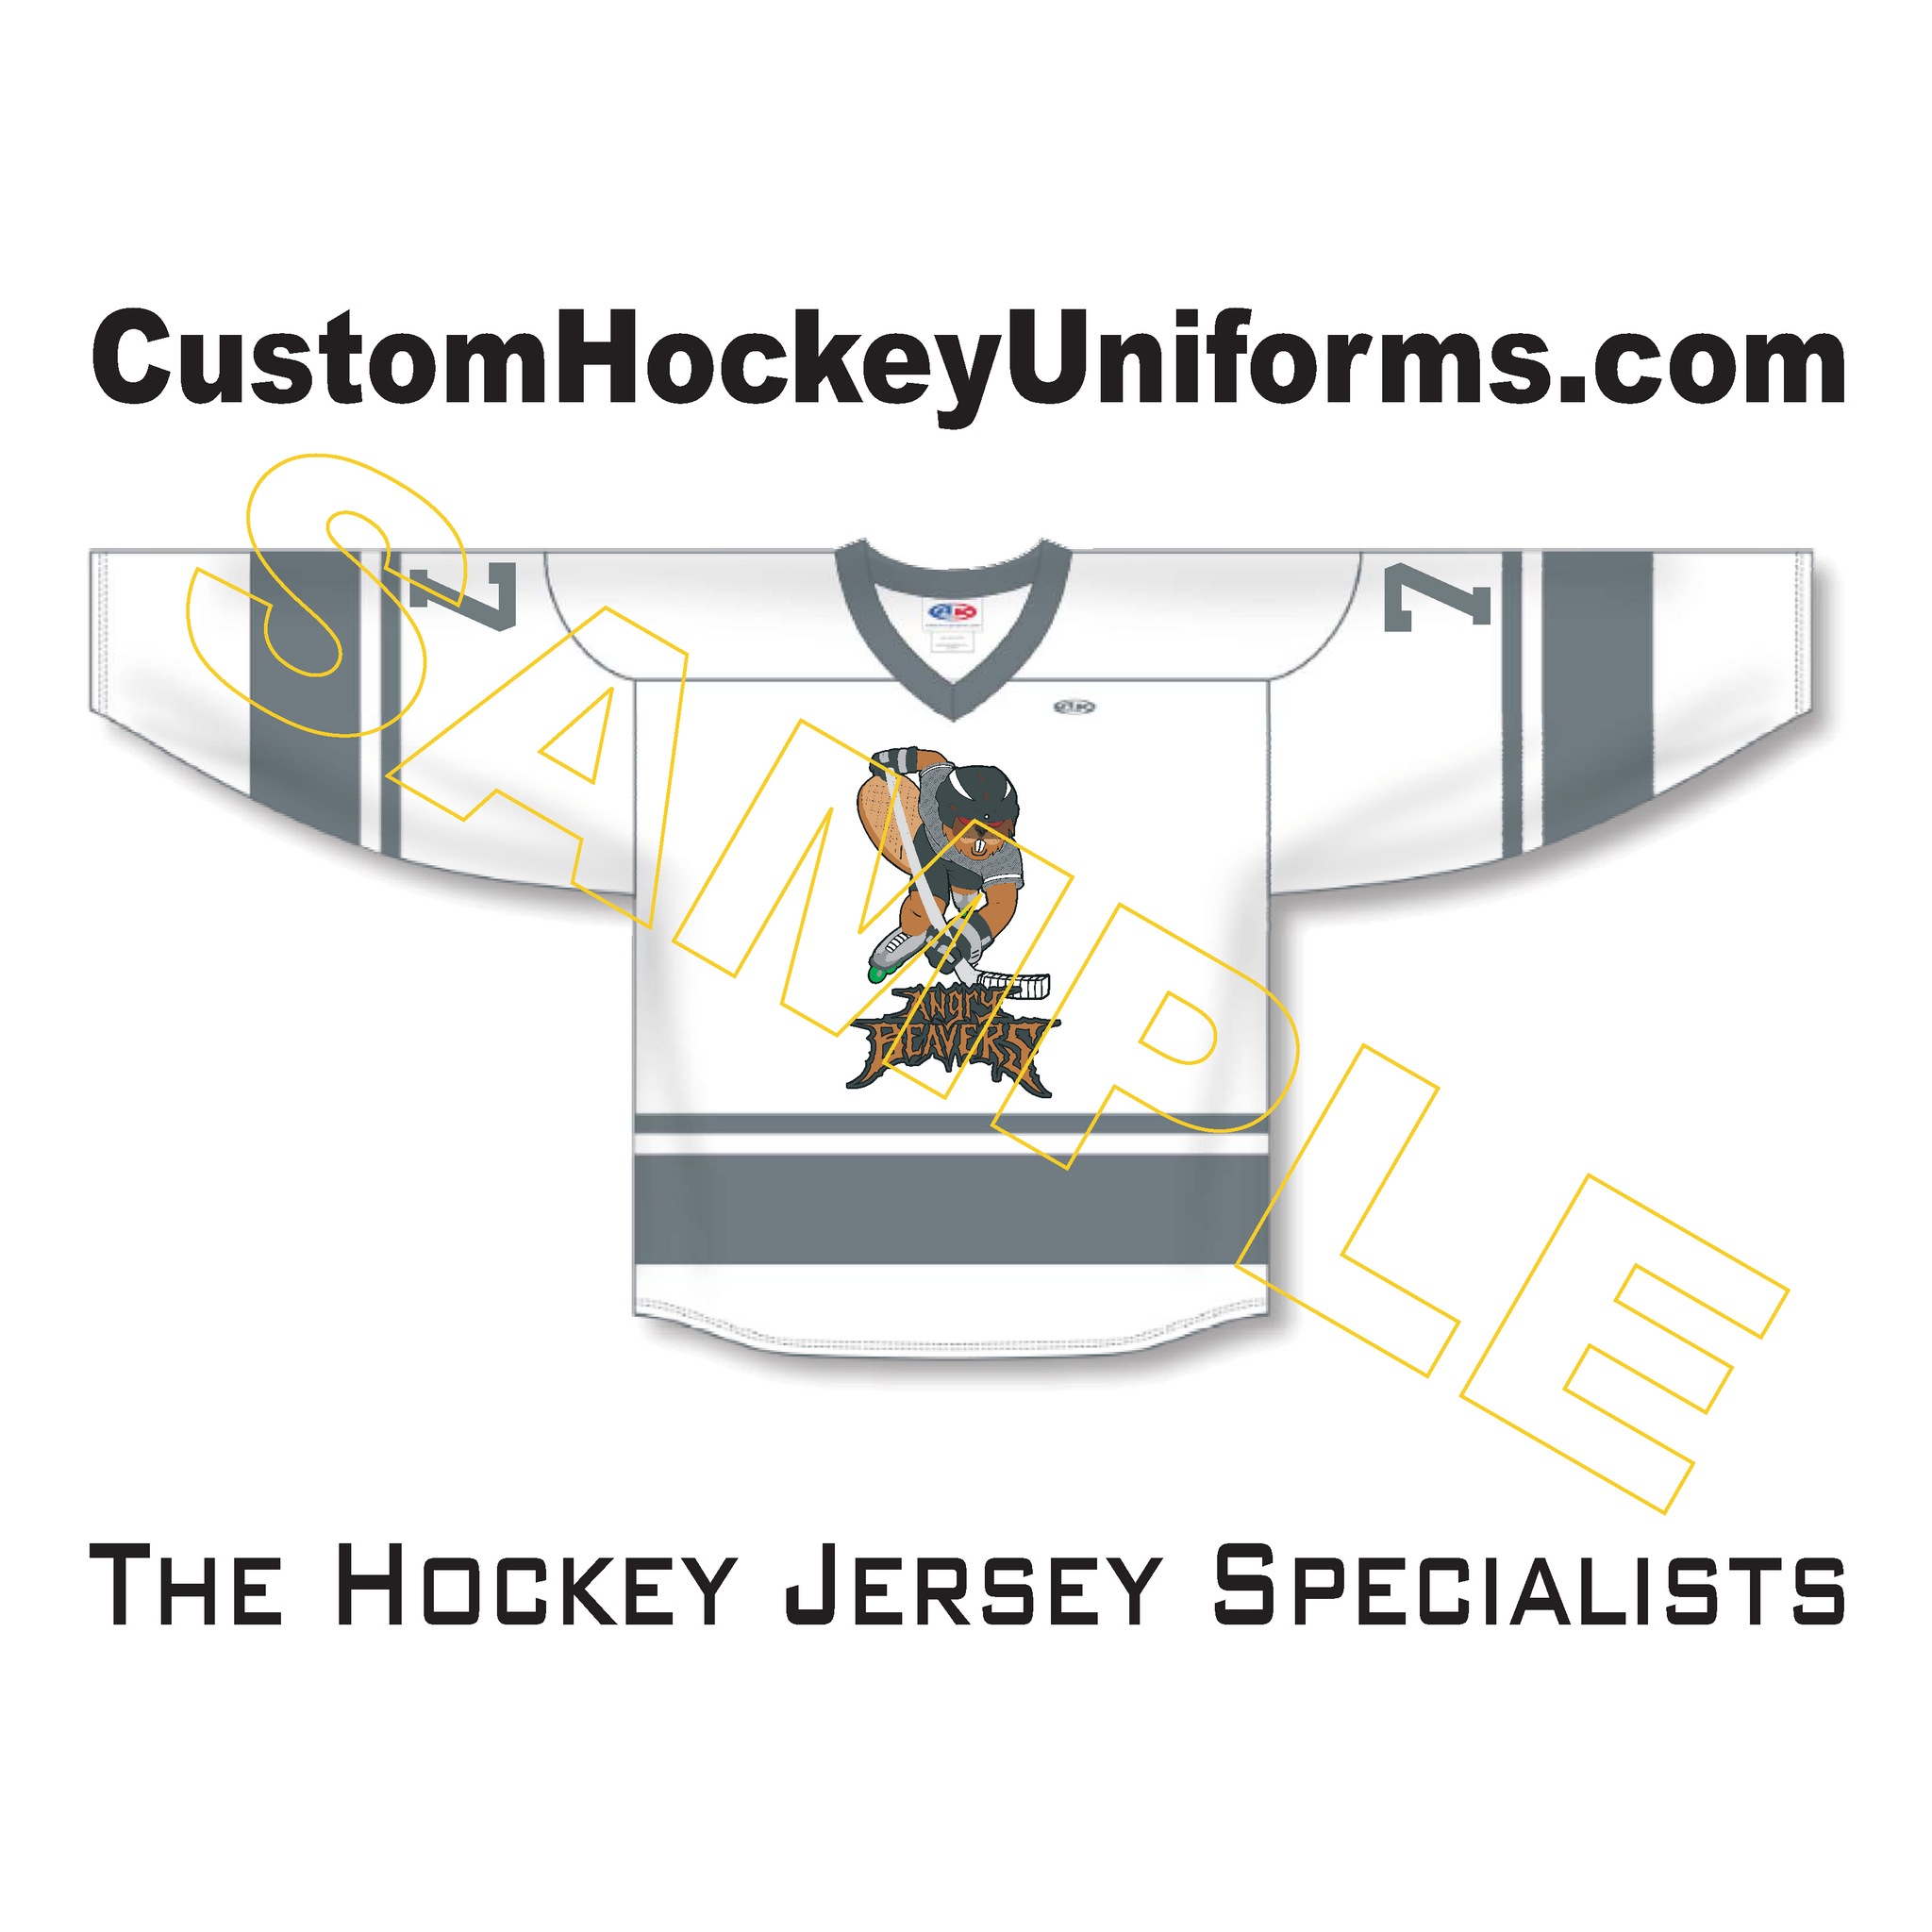 Custom Hockey Jerseys, Hockey Uniforms For Your Team